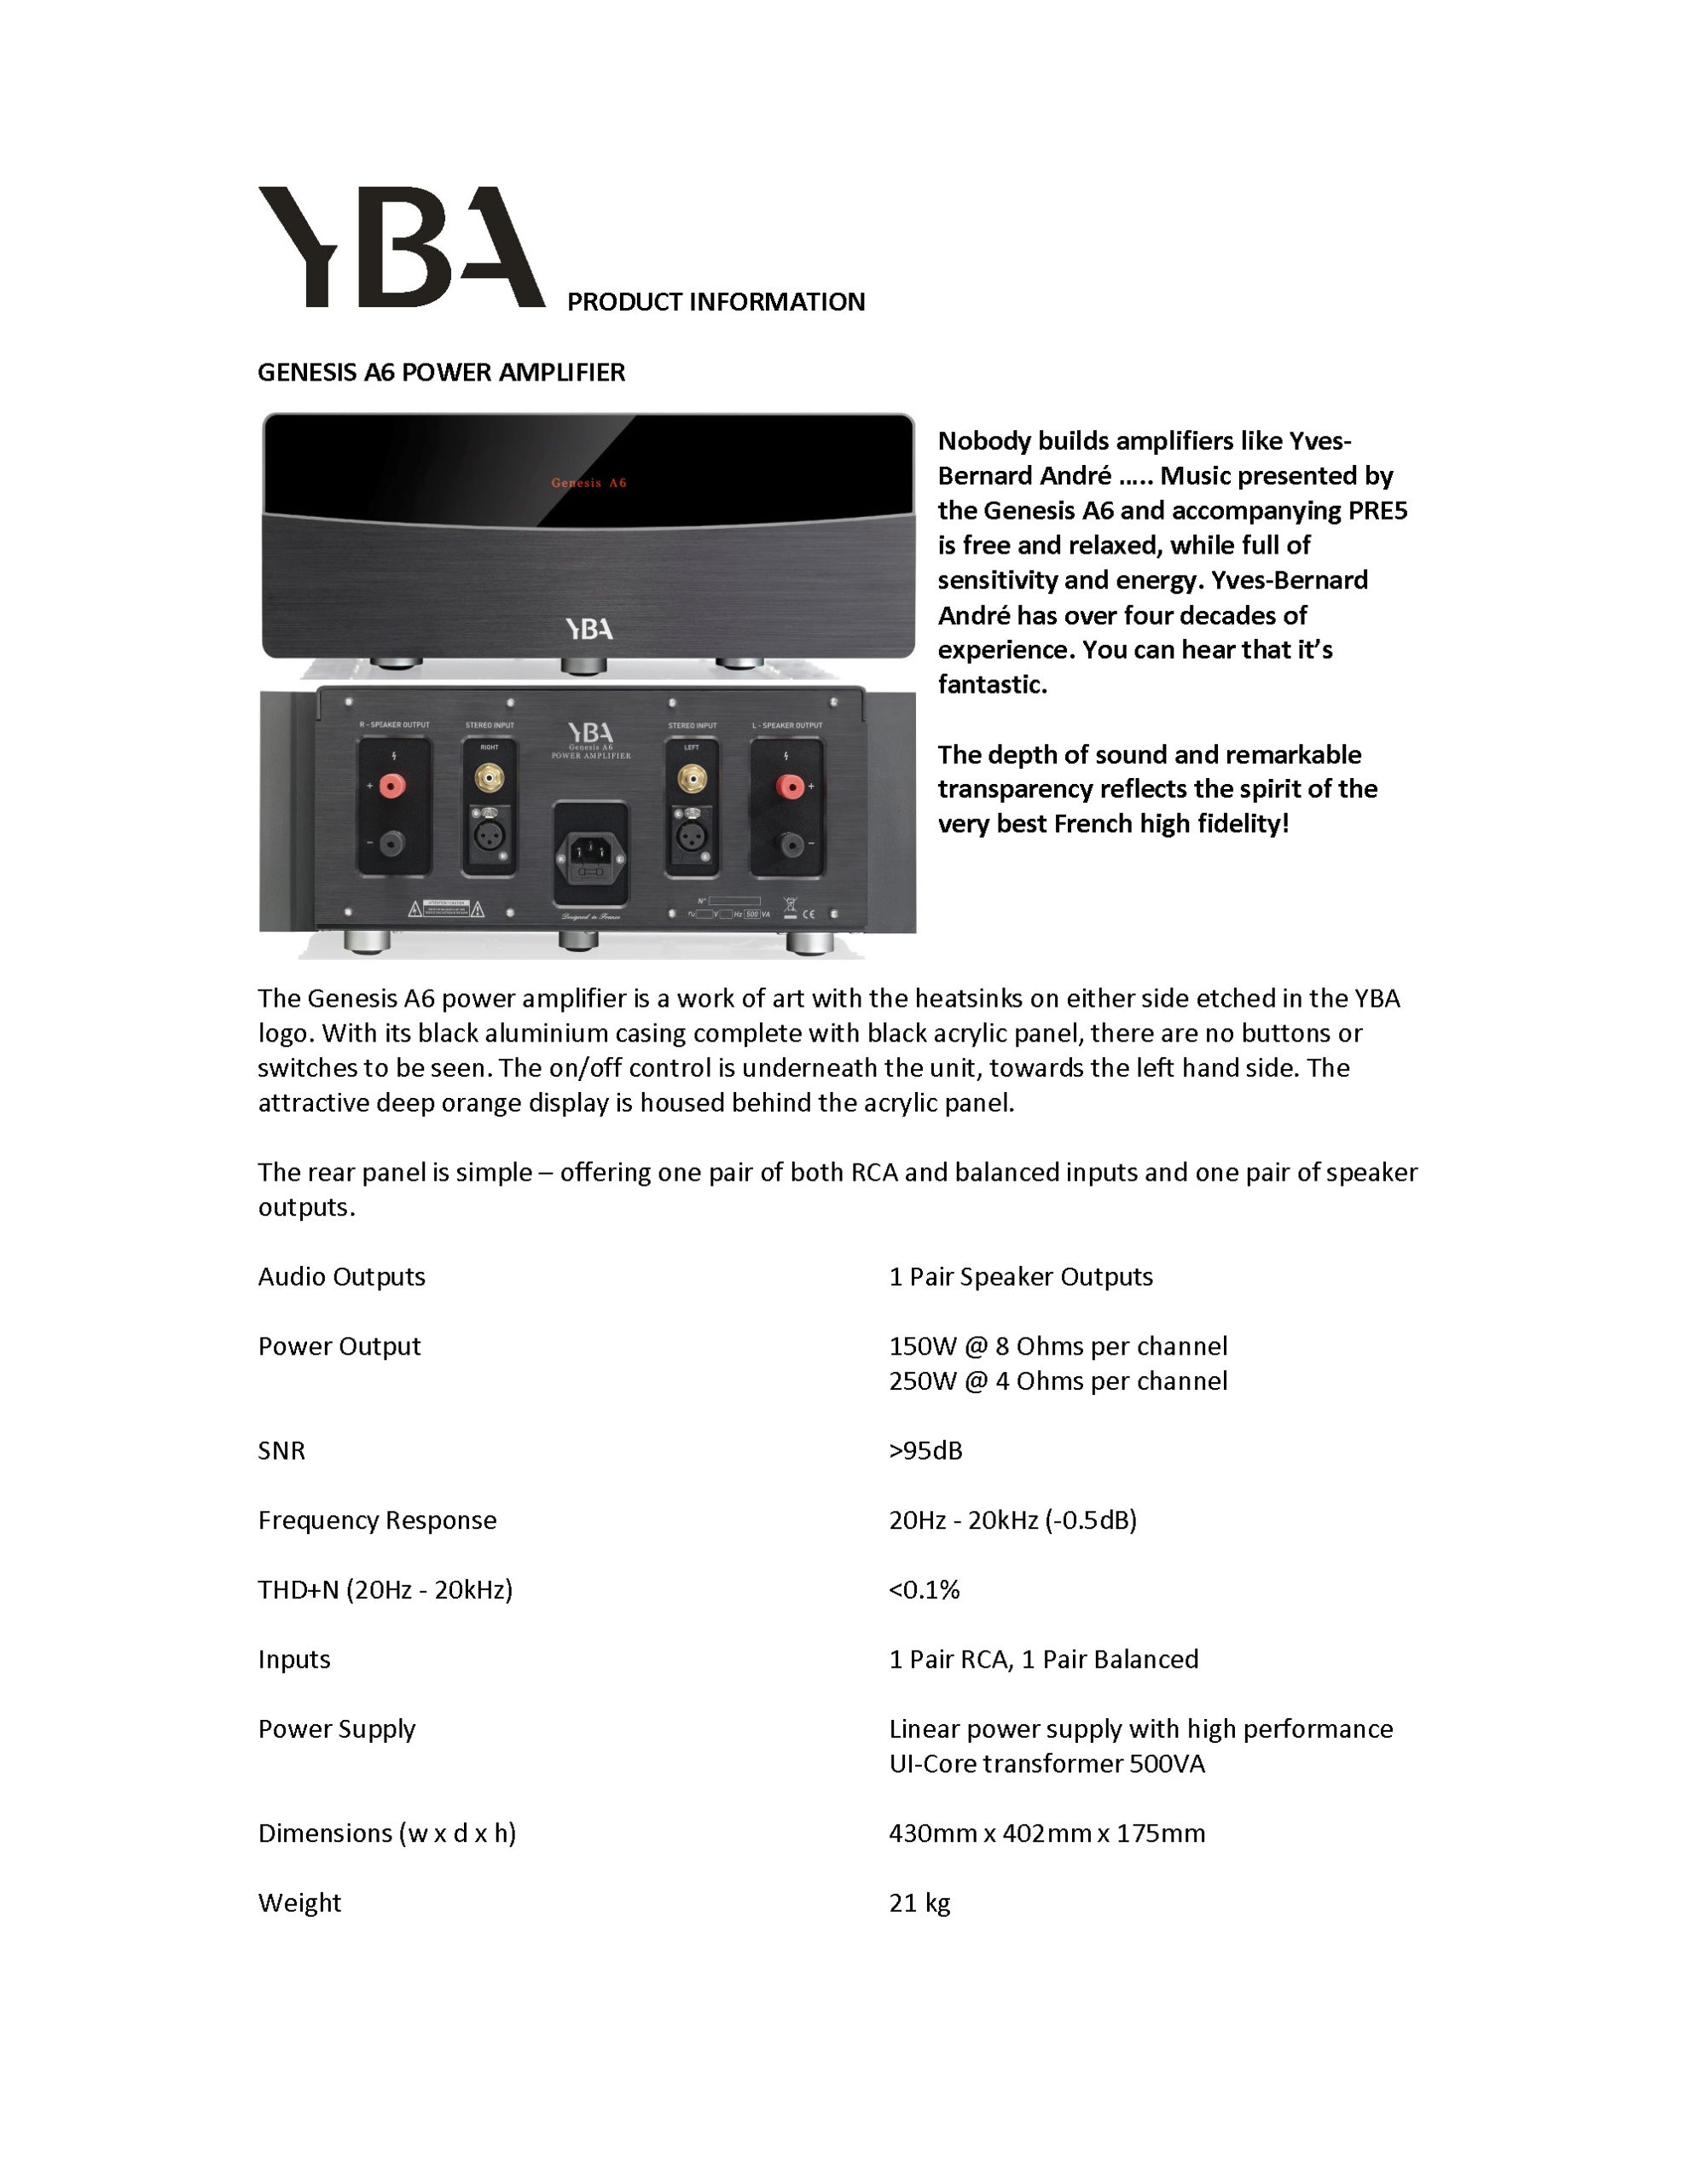 YBA Genesis A6 Info Sheet - Norman Audio